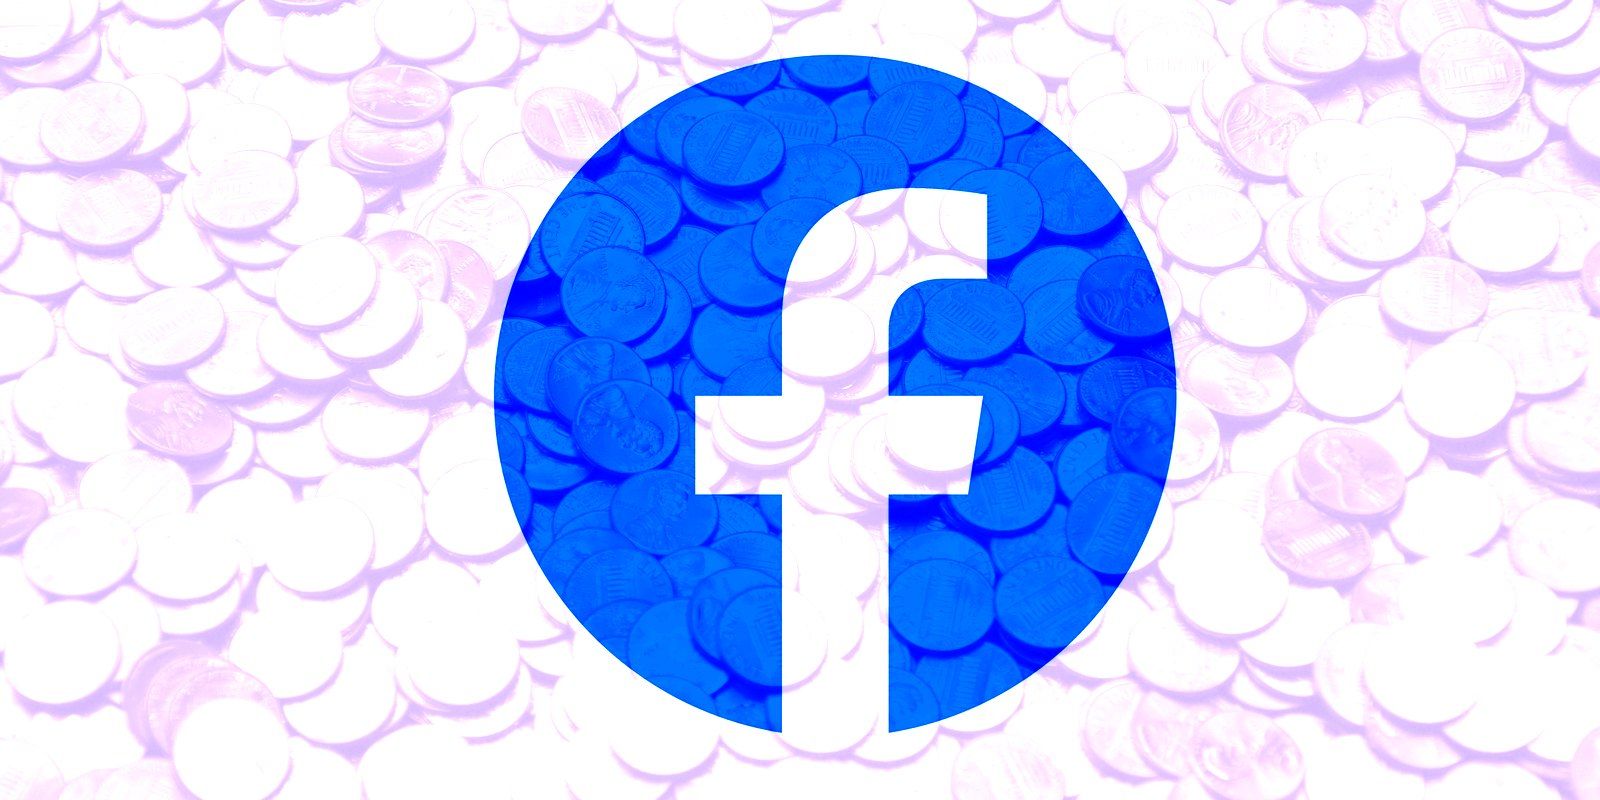 Facebook crypto coin plans going bust.